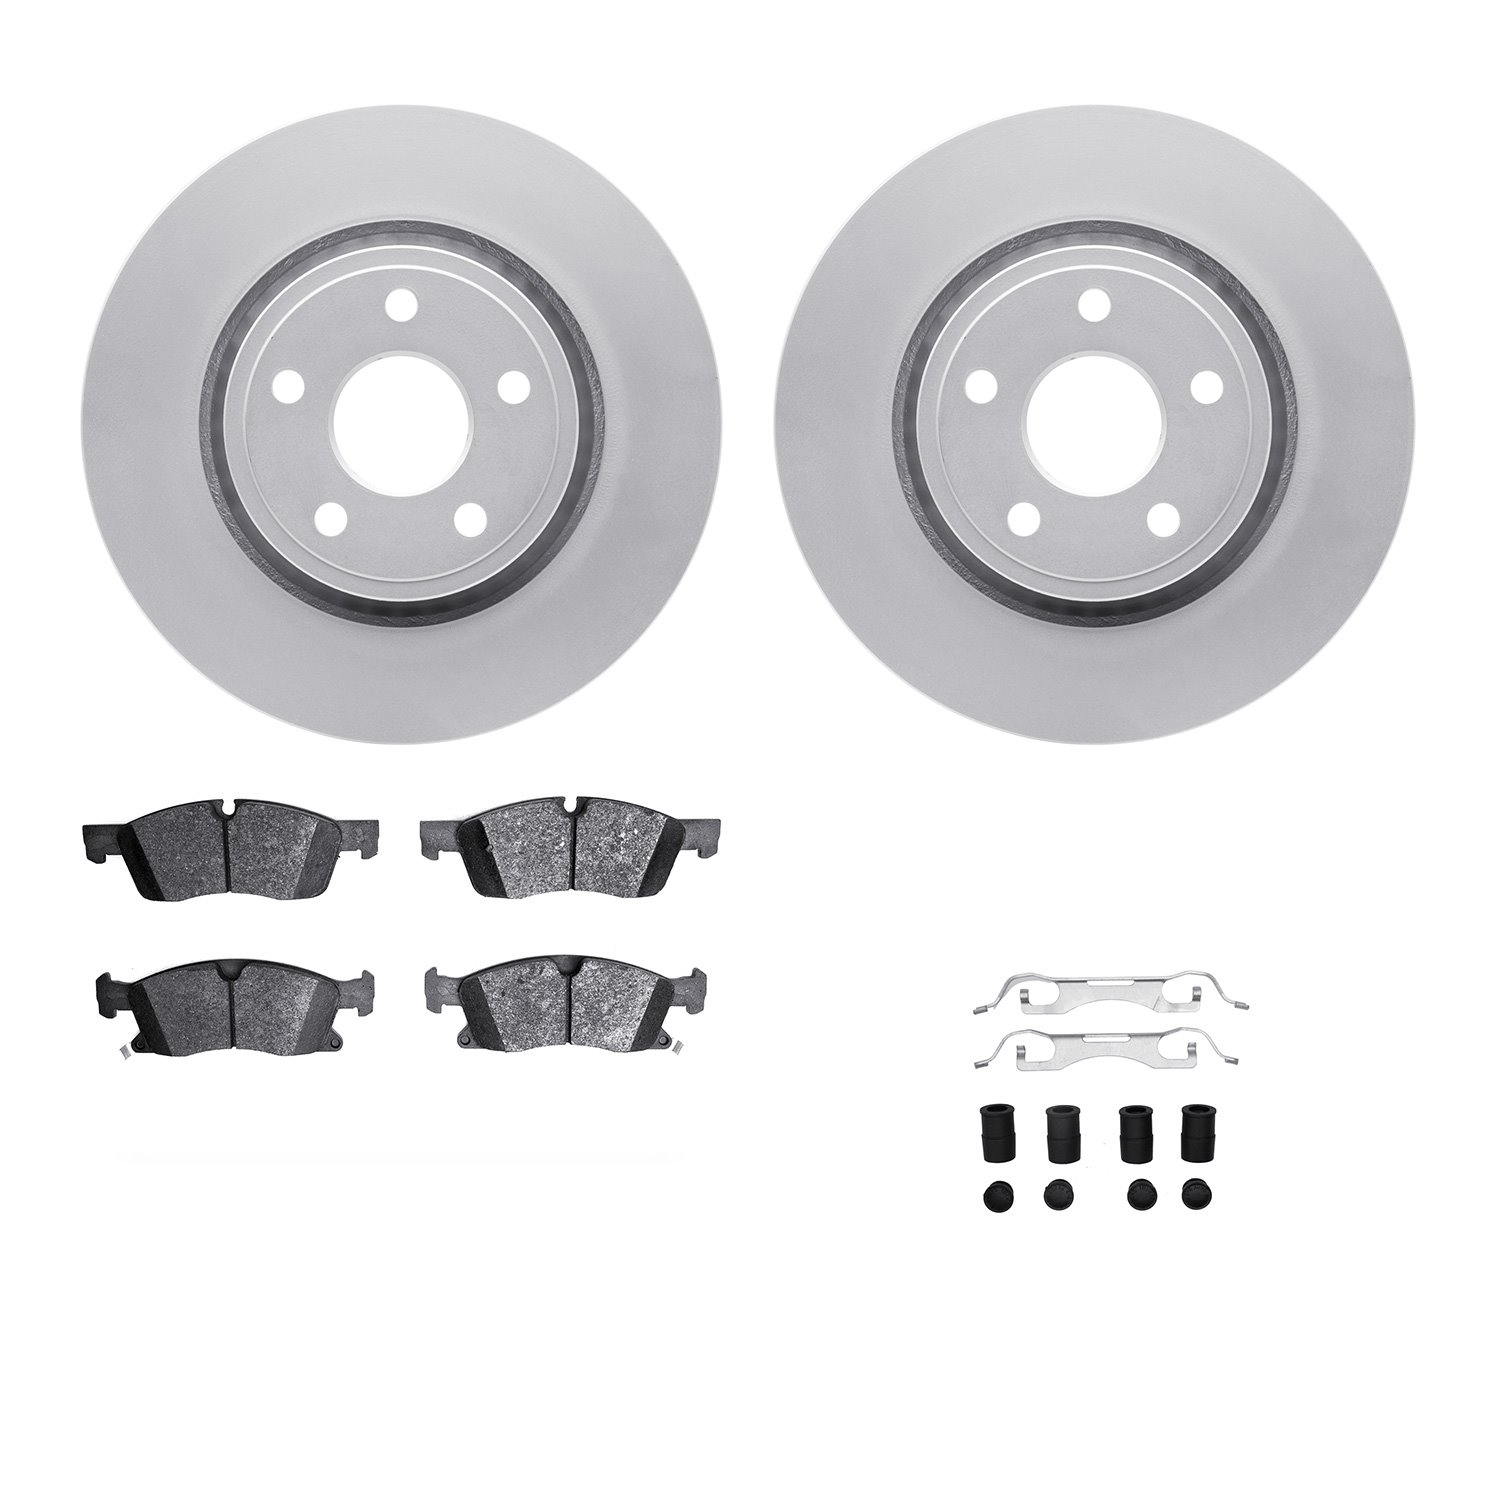 4312-42035 Geospec Brake Rotors with 3000-Series Ceramic Brake Pads & Hardware, Fits Select Mopar, Position: Front